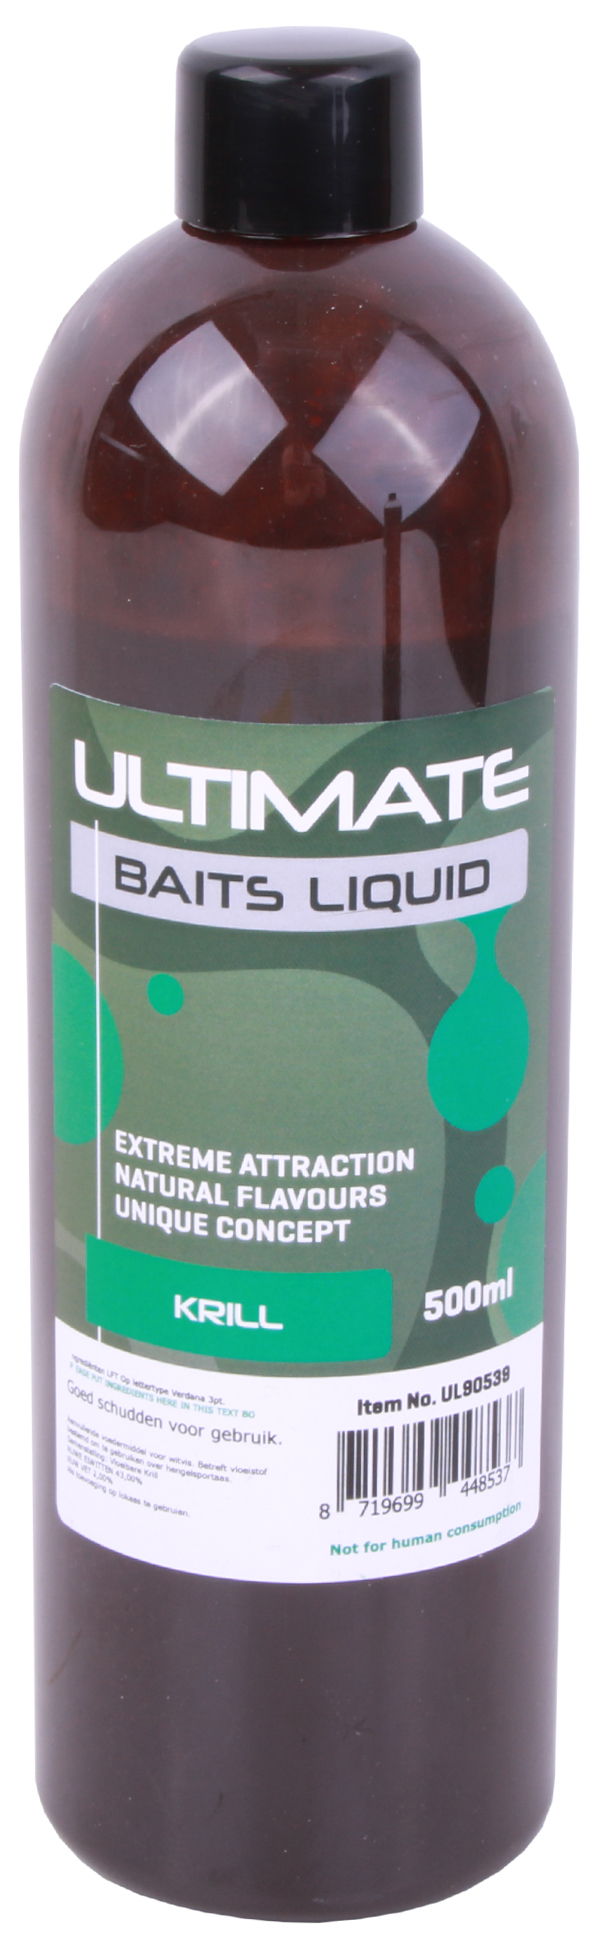 Ultimate Baits Líquido 500ml - Krill